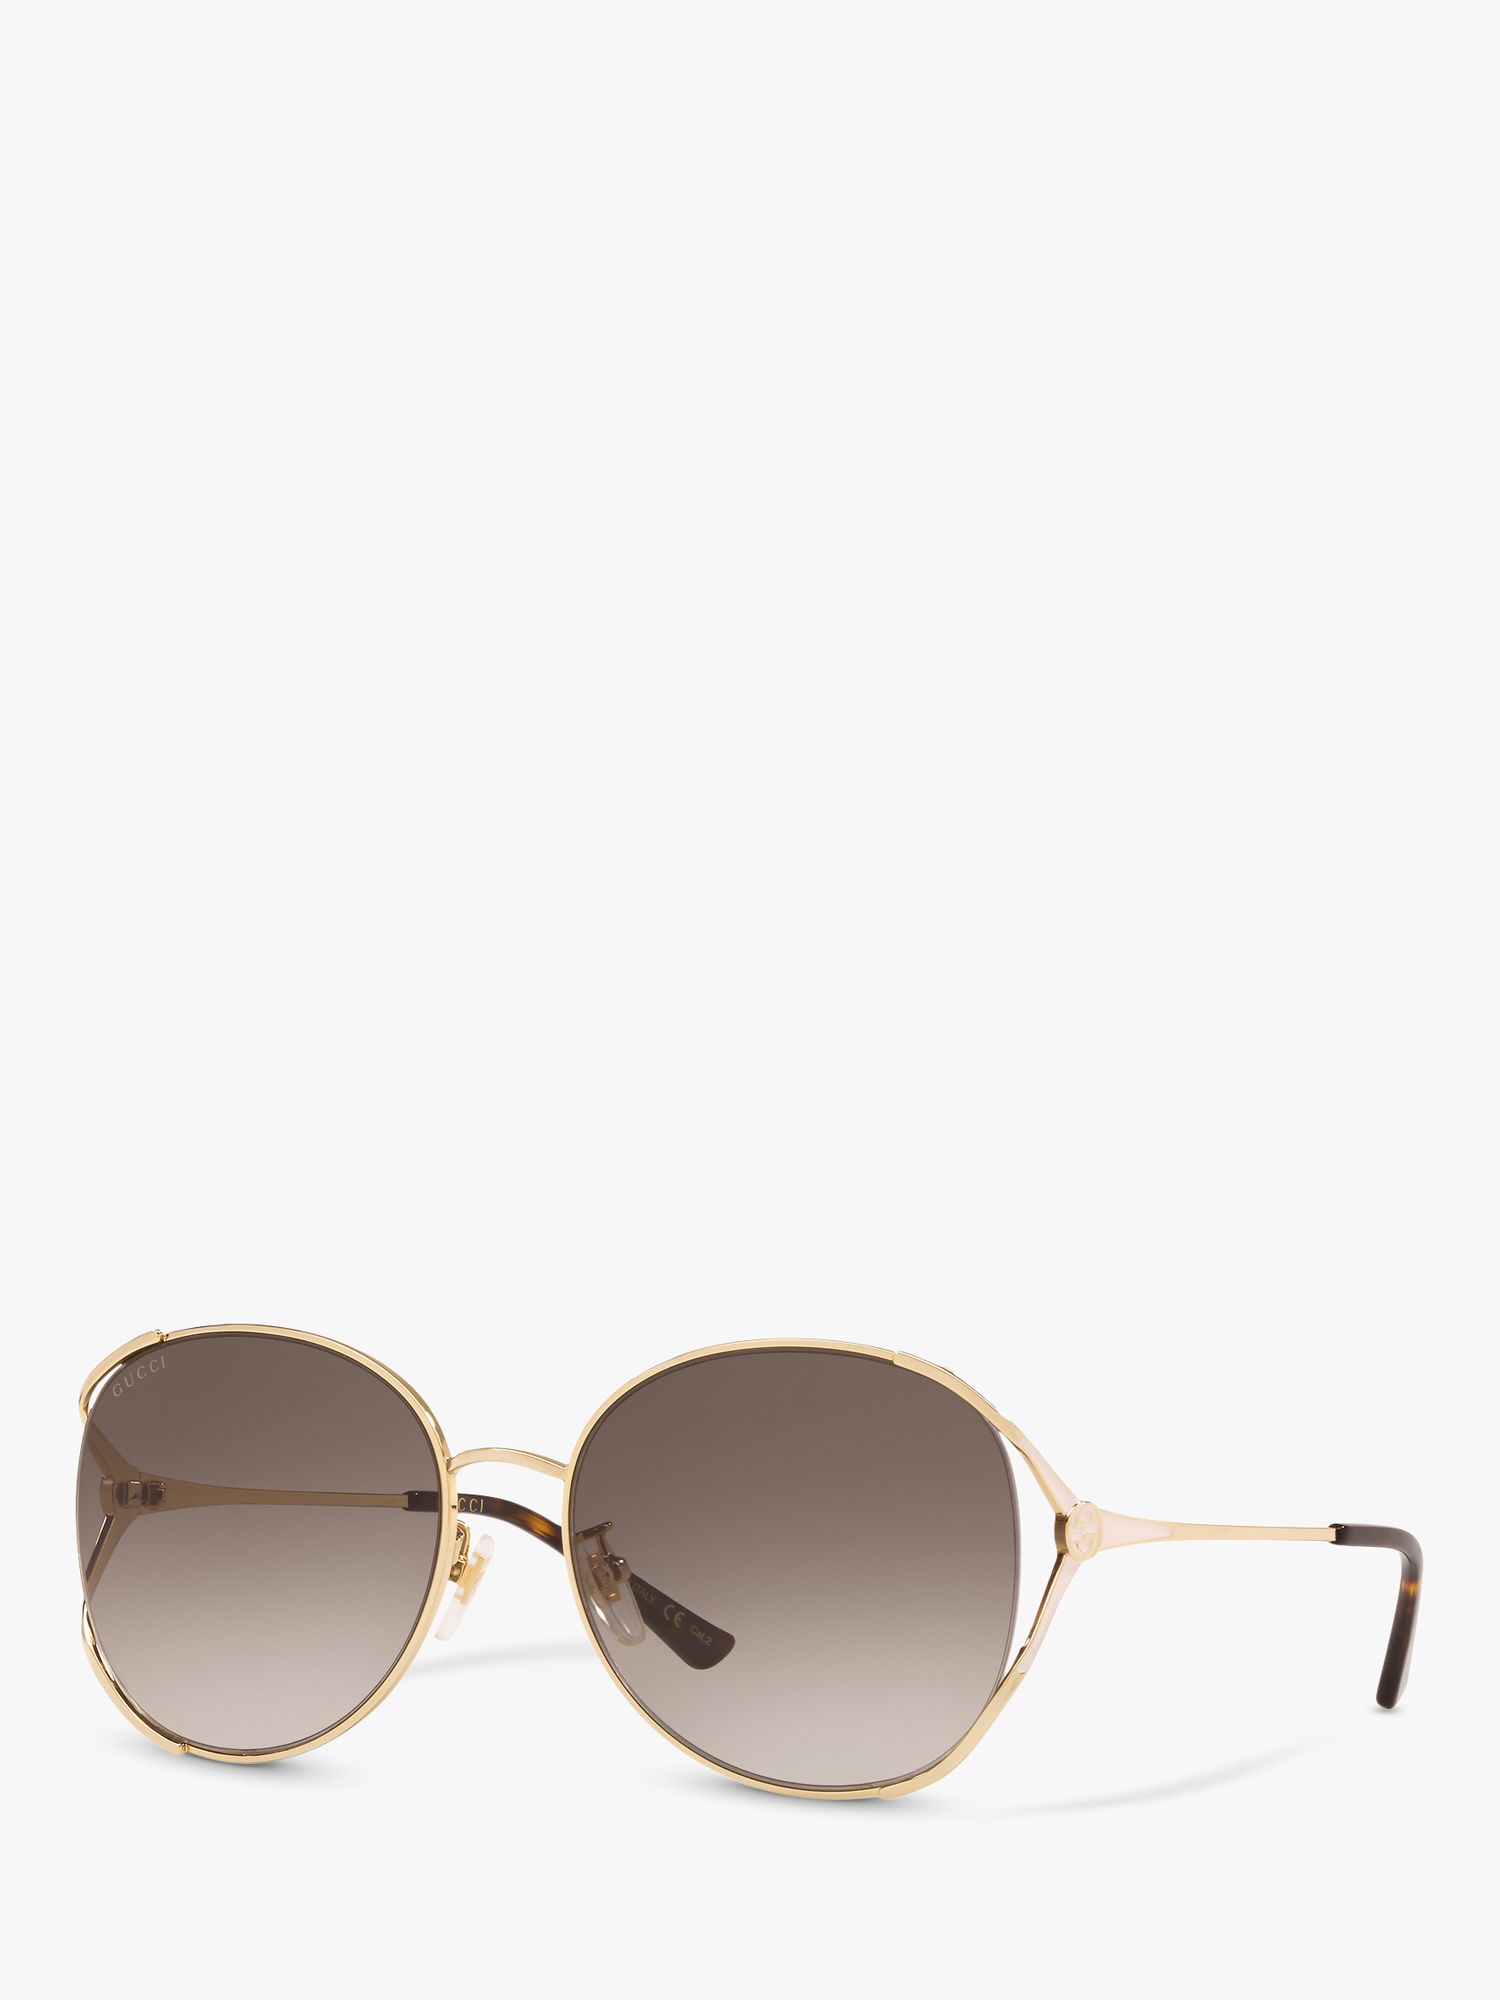 Gucci GG0650SK Women's Round Sunglasses, Gold/Brown Gradient